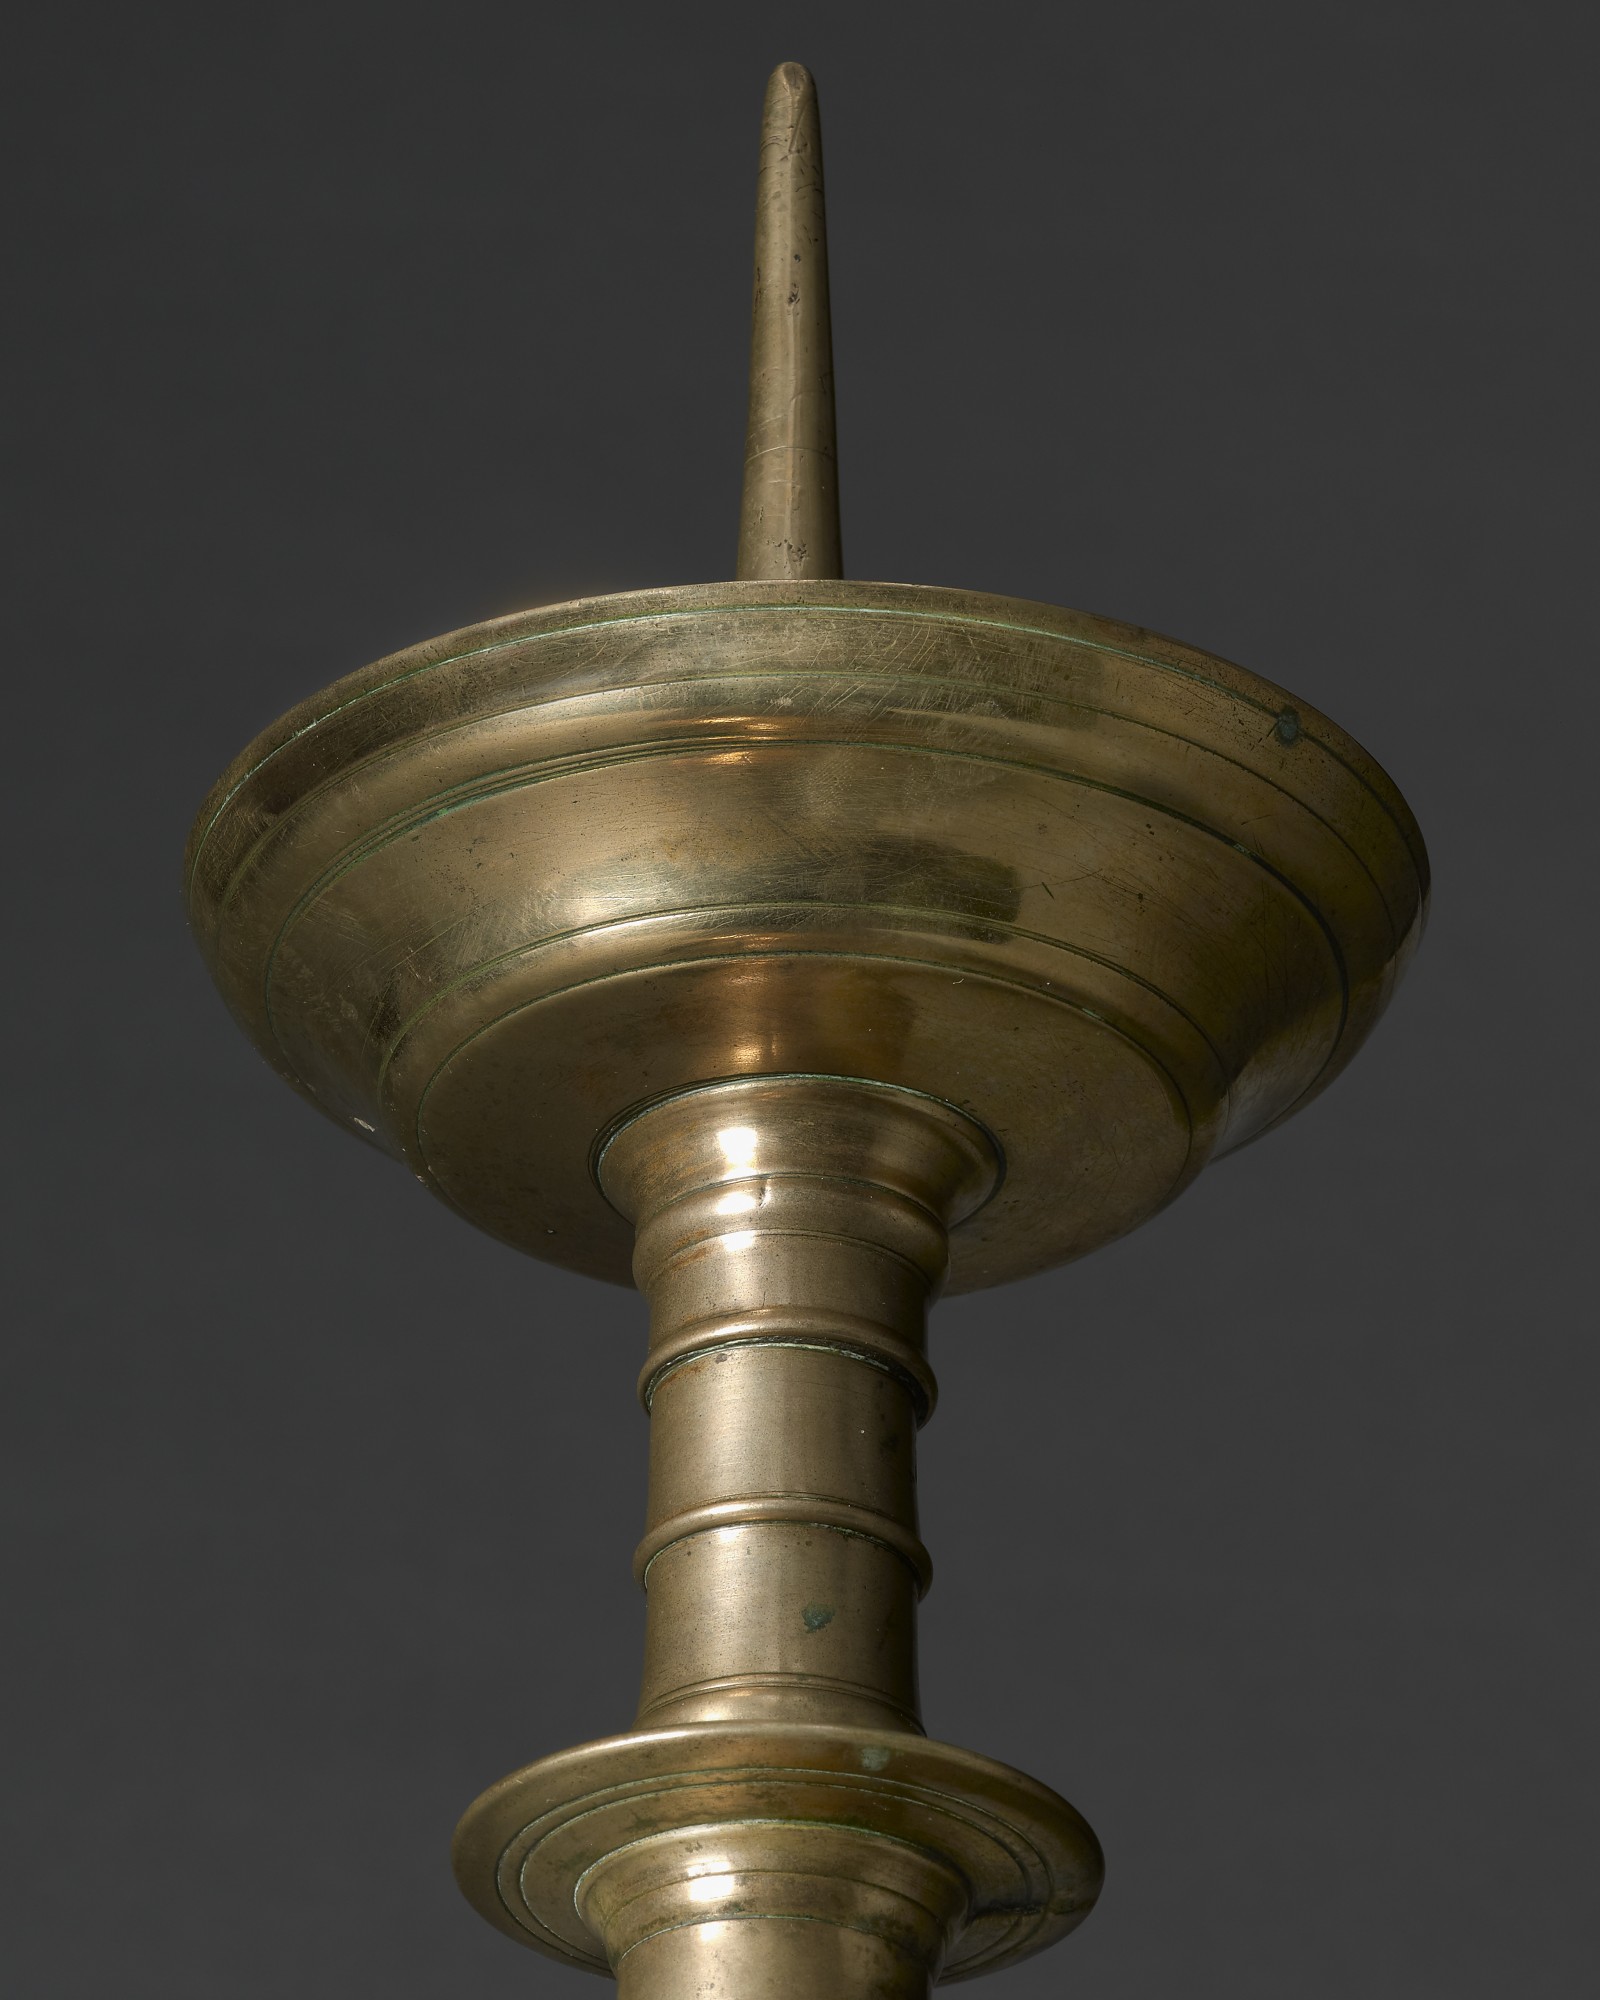 A Pair of Pricket Candlesticks, Flemish, c. 1500